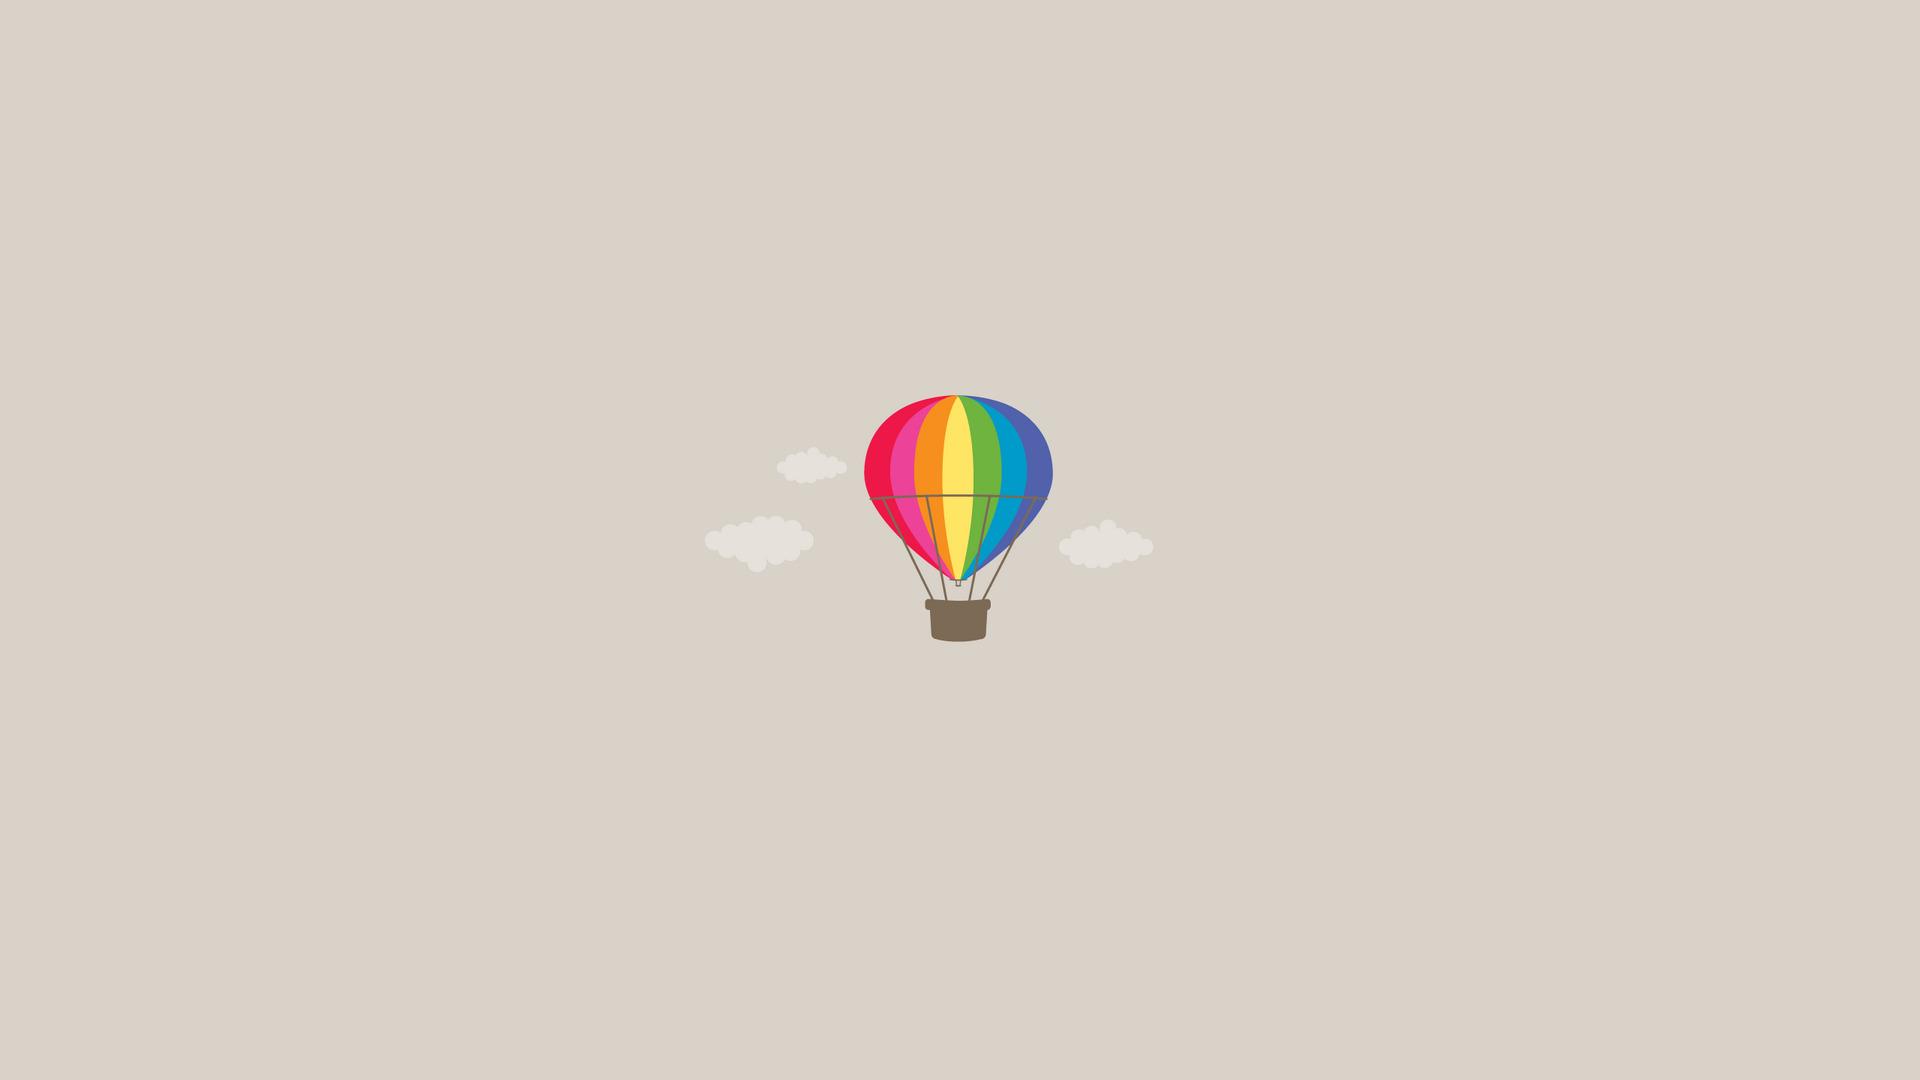 Colorful Hot Air Balloon Simple Minimalistic Desktop Wallpaper